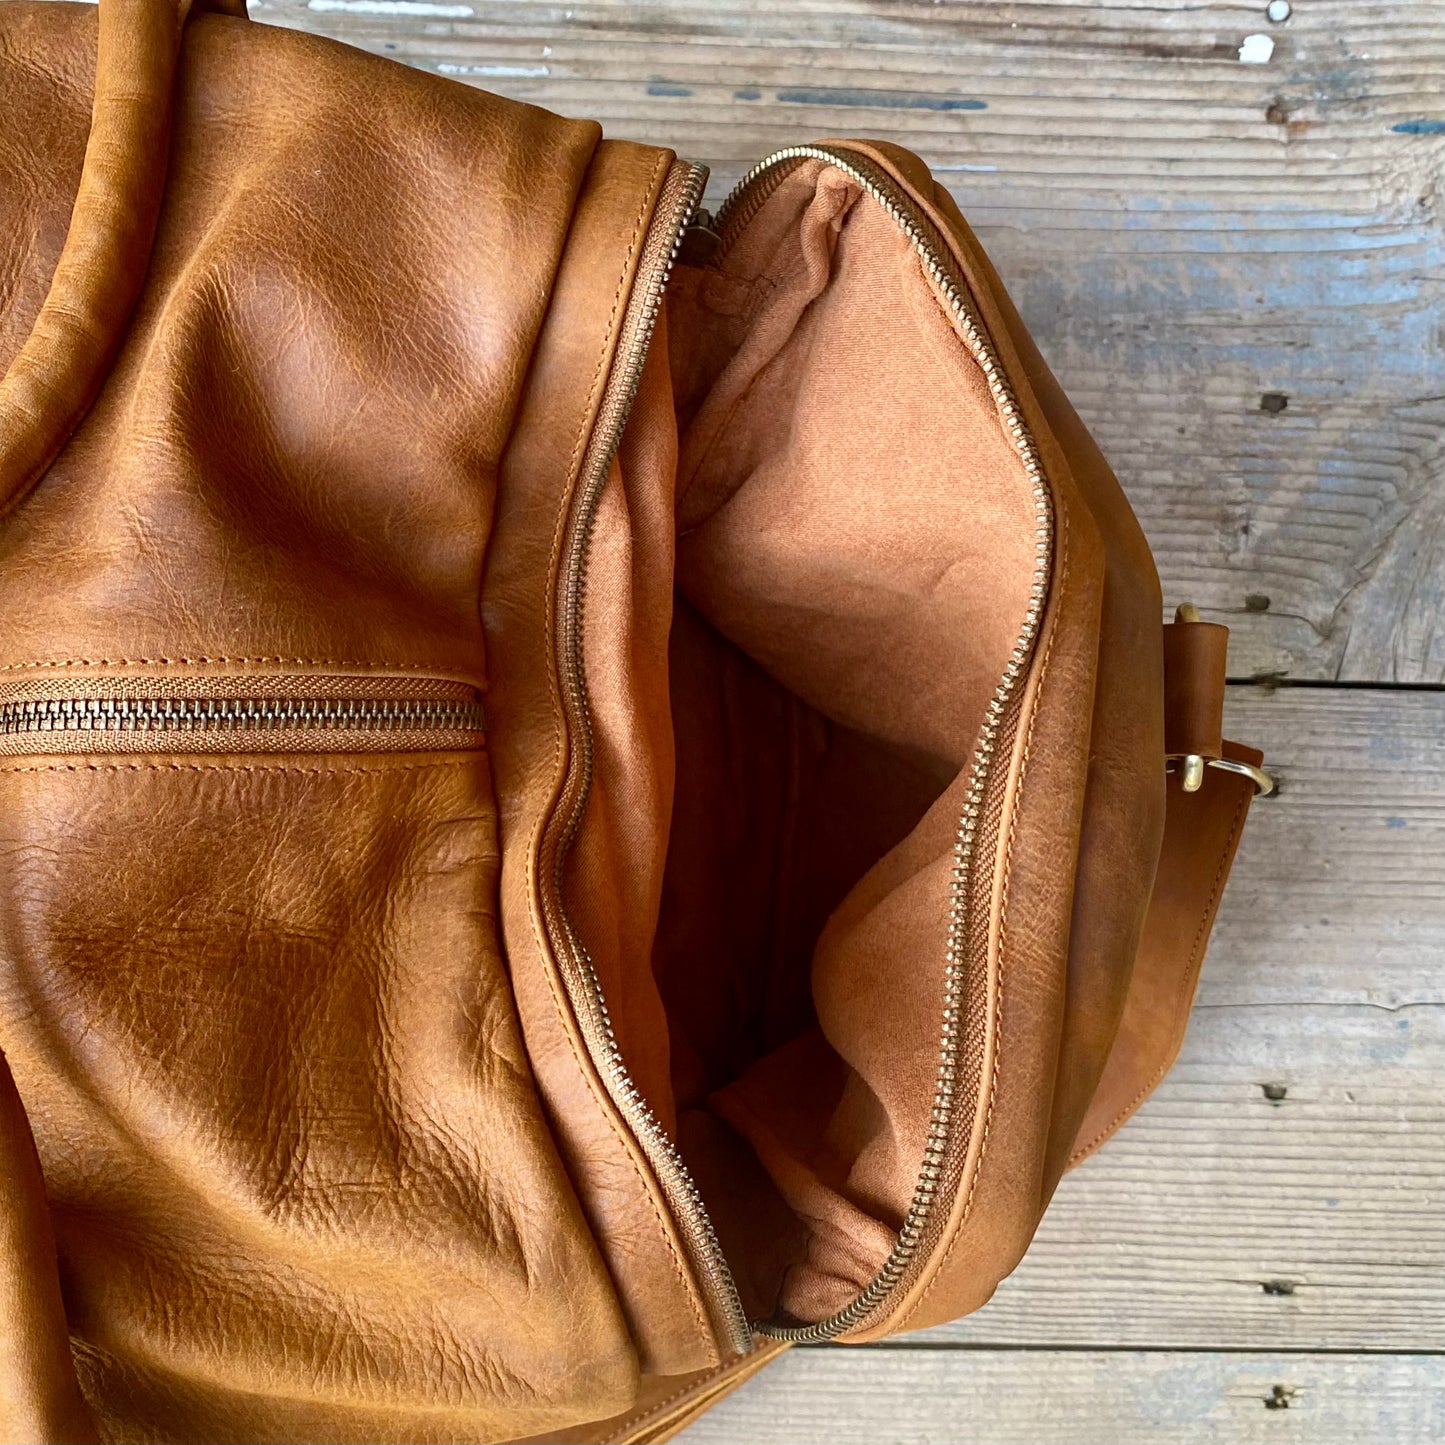 Soft Leather Travel / Duffle / Sports Bag